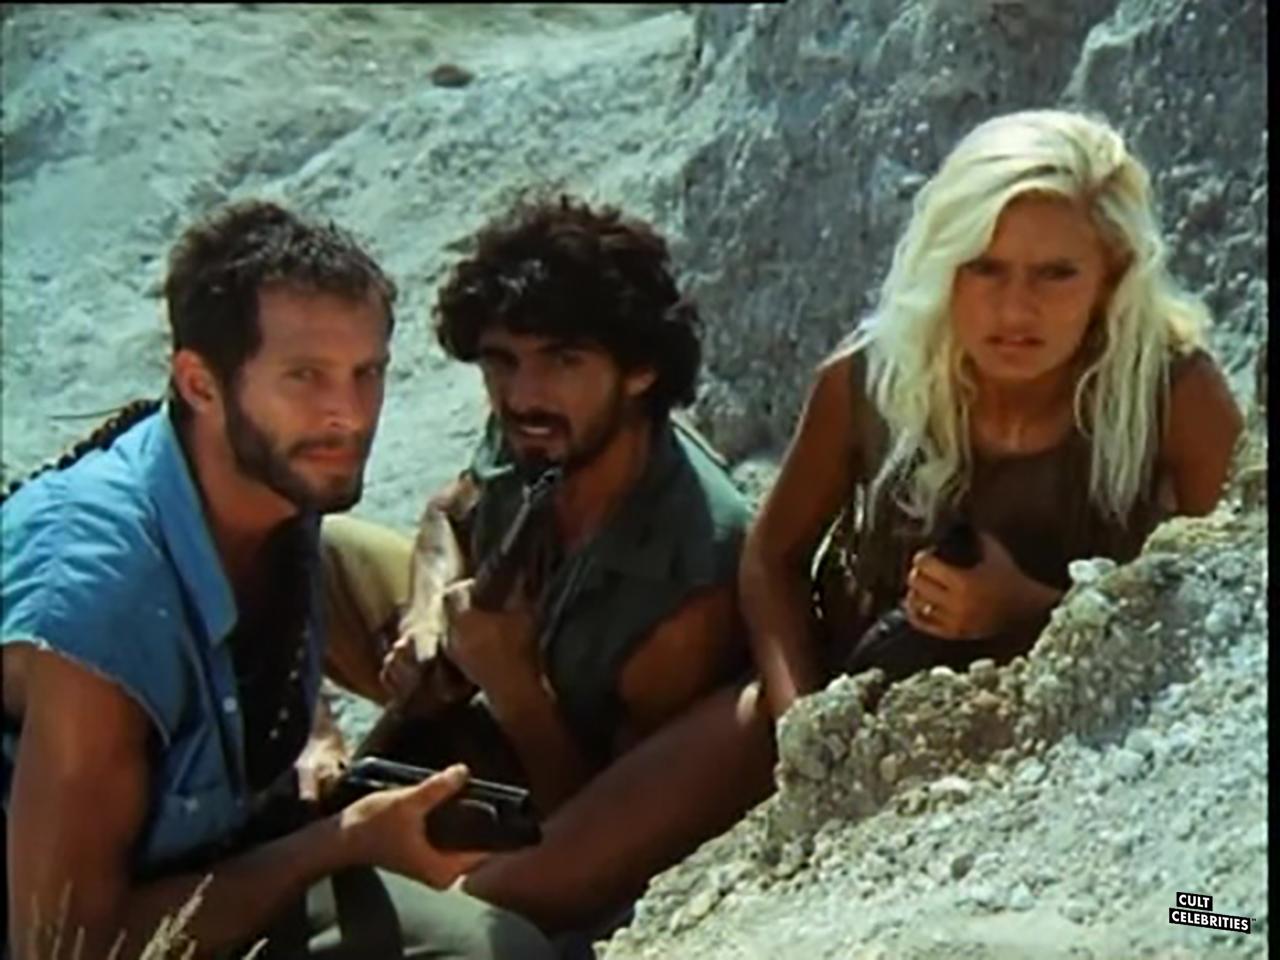 Harrison Muller and Sabrina Siani in 2020 Texas Gladiators (1982)